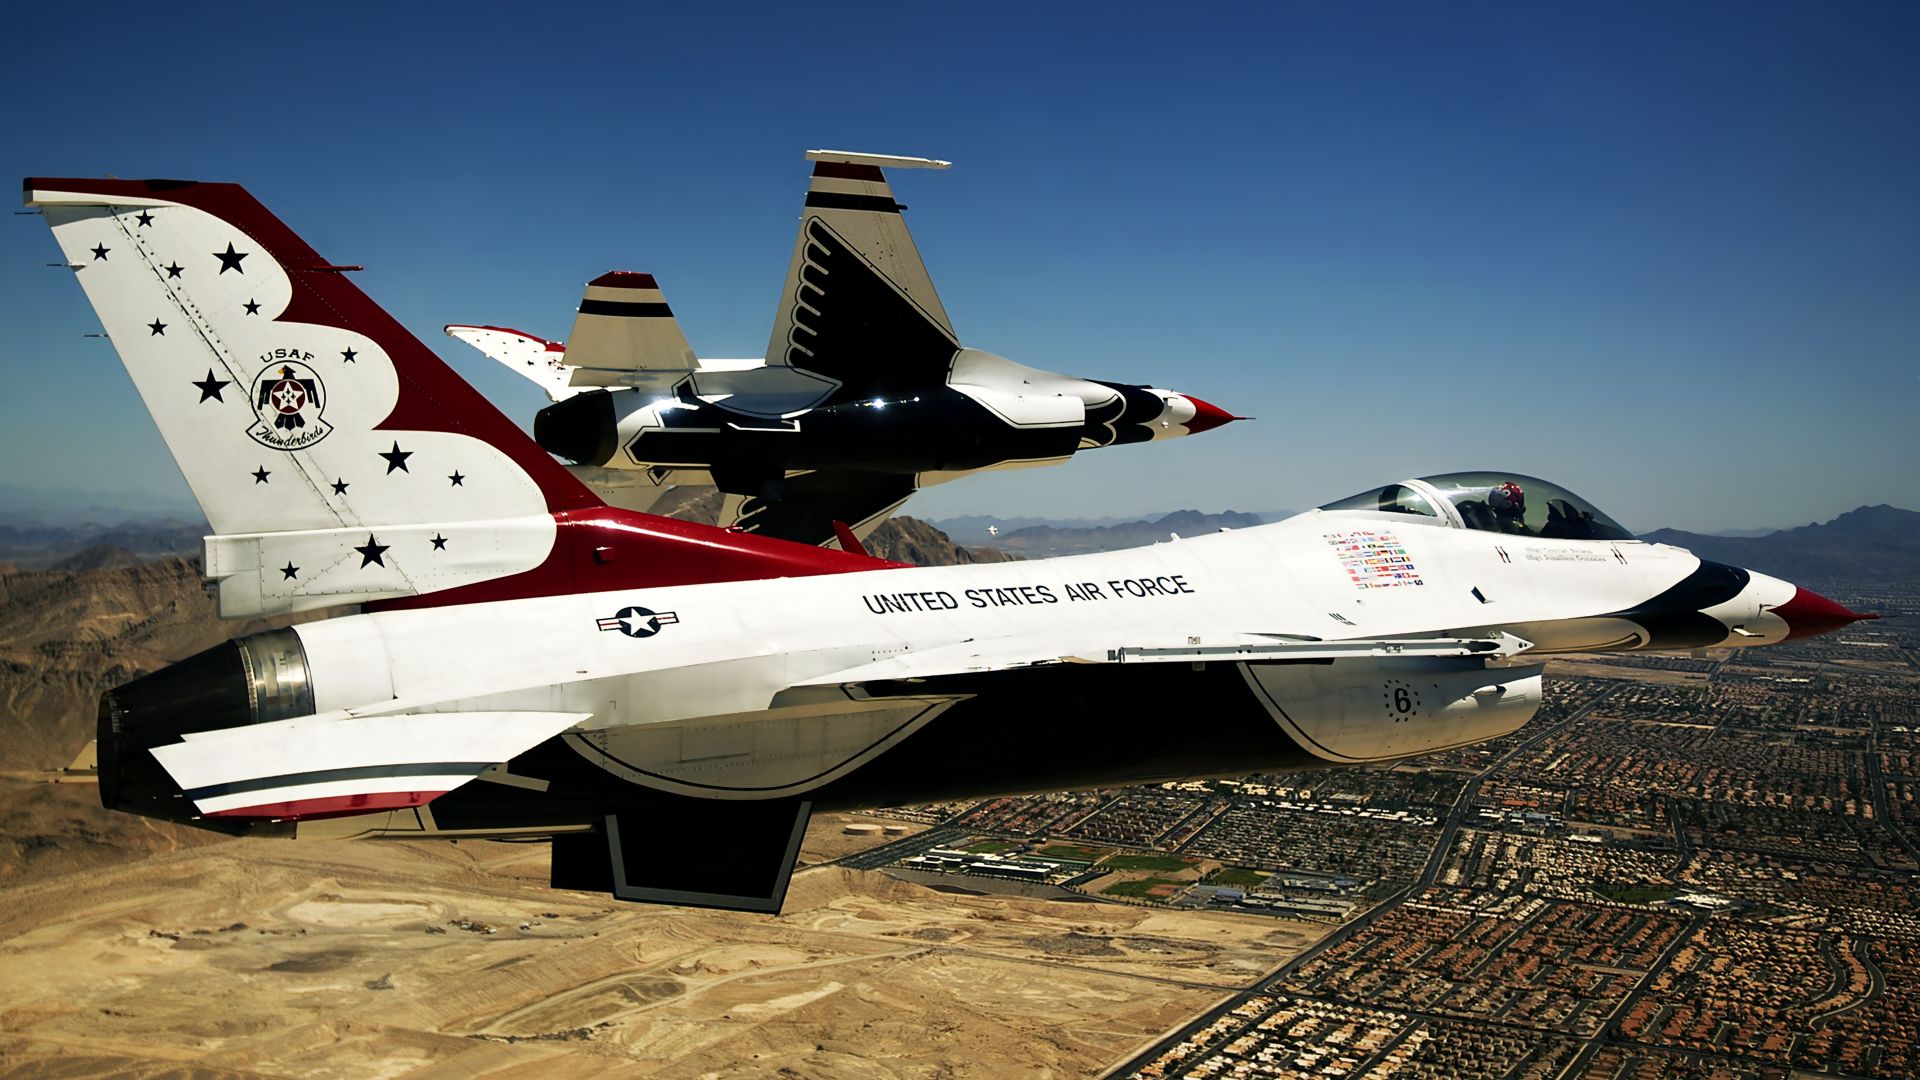 Thunderbird f-16, fighter aircraft, U.S. Airforce (horizontal)